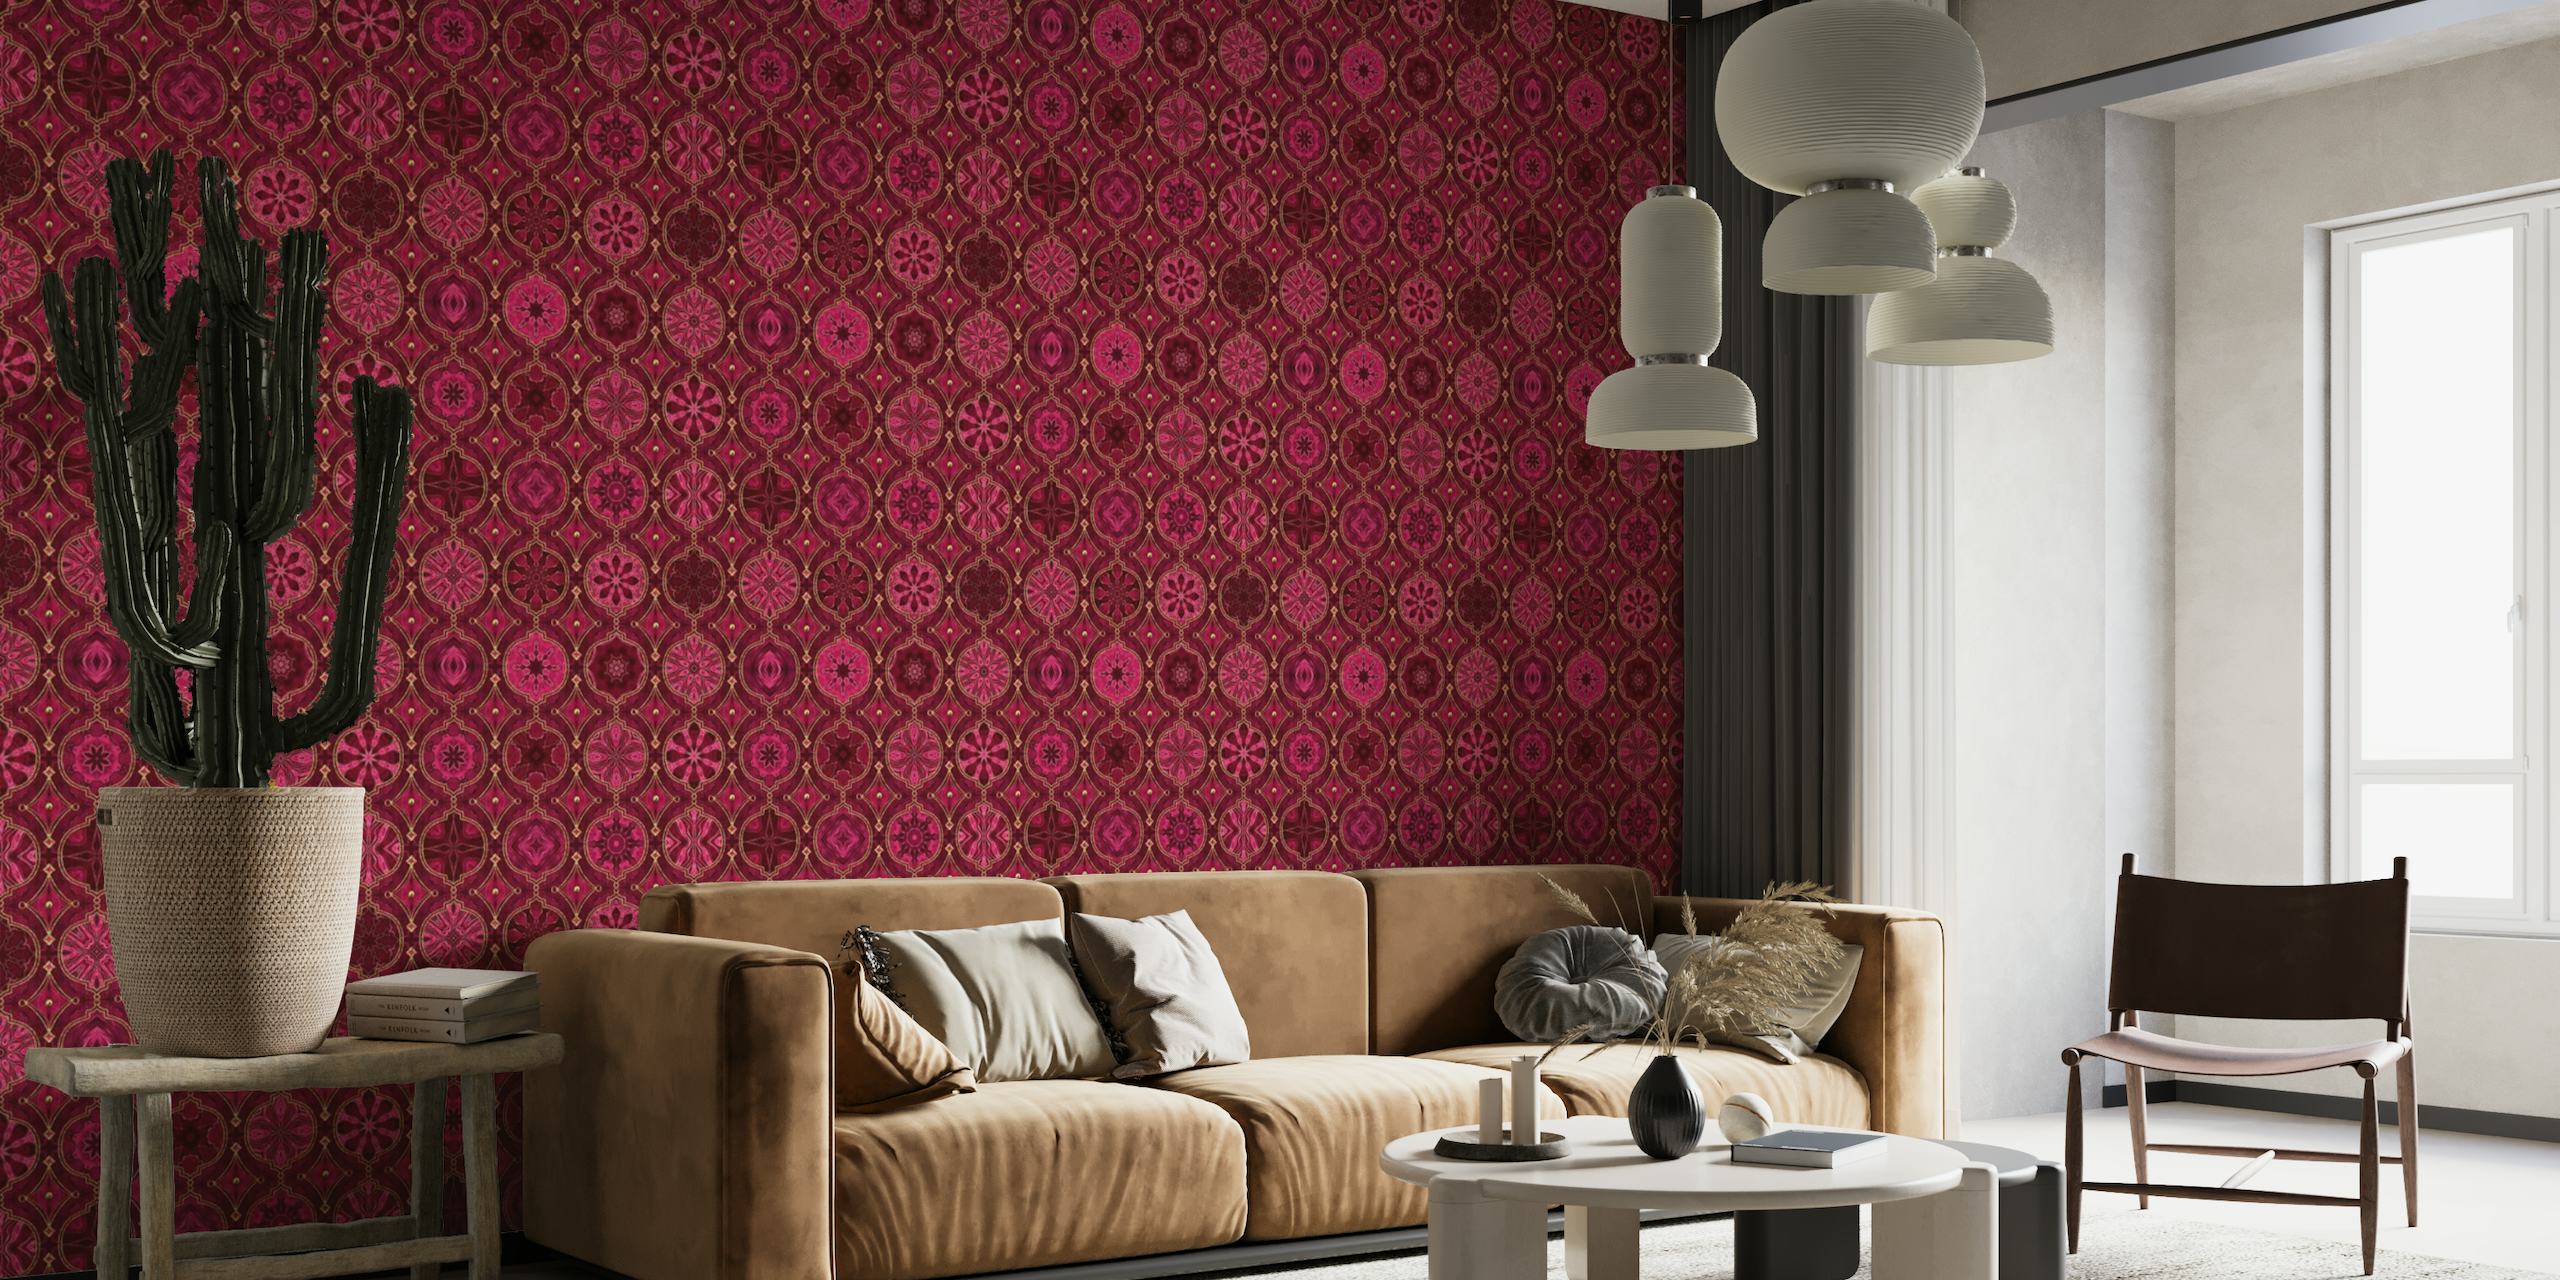 Treasures of Morocco Oriental Tile Design Burgundy Pink Gold papel de parede